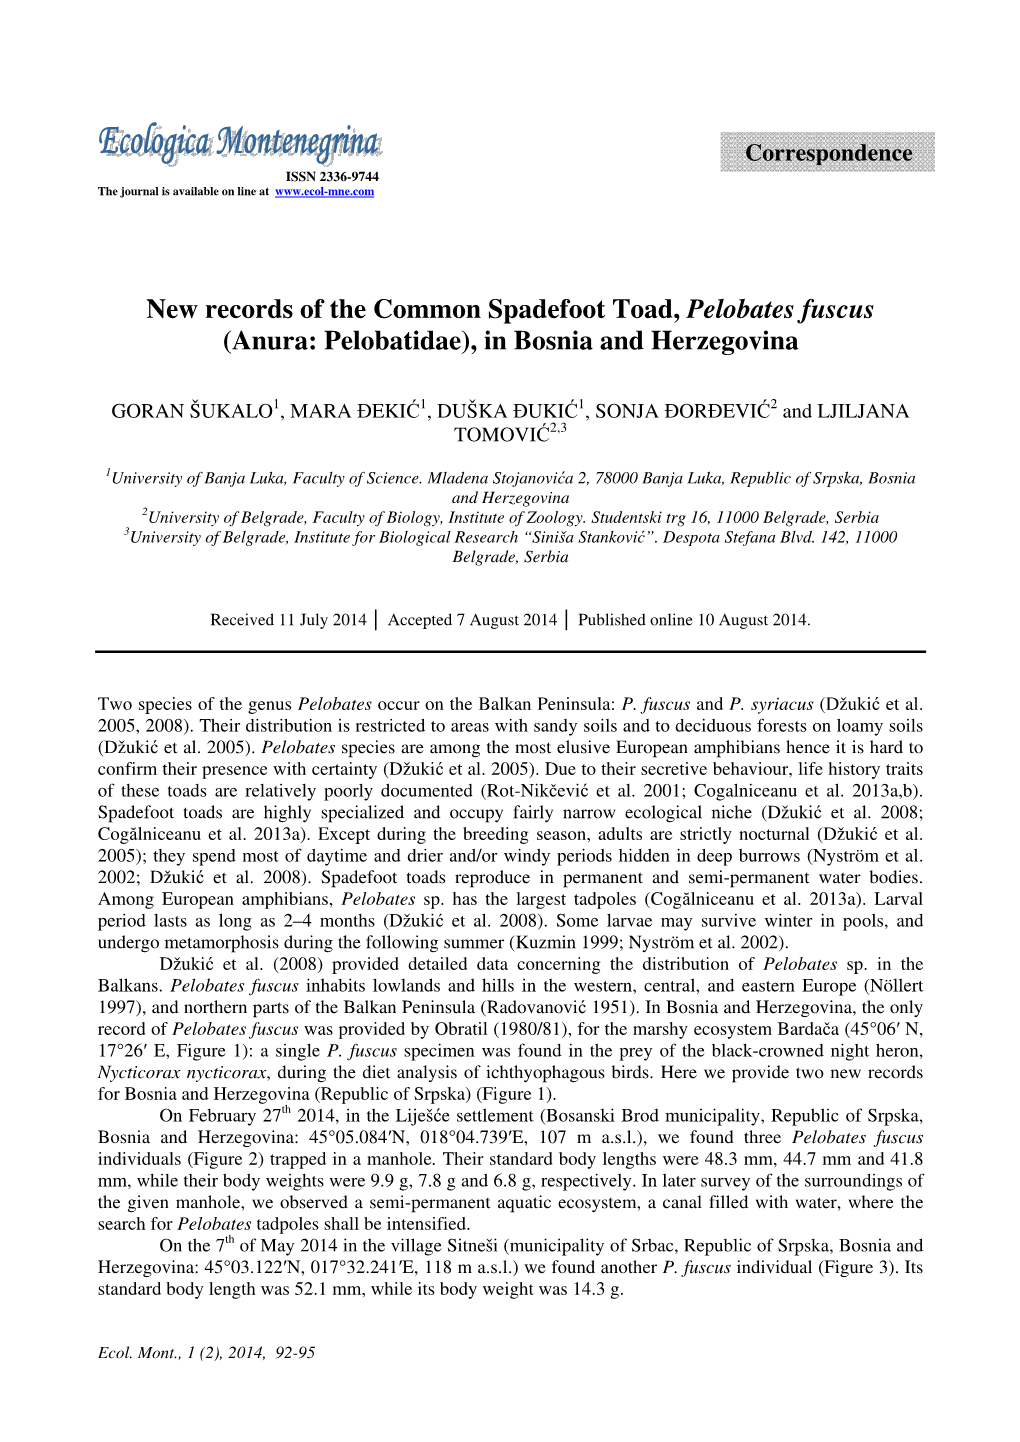 New Records of the Common Spadefoot Toad, Pelobates Fuscus (Anura: Pelobatidae), in Bosnia and Herzegovina